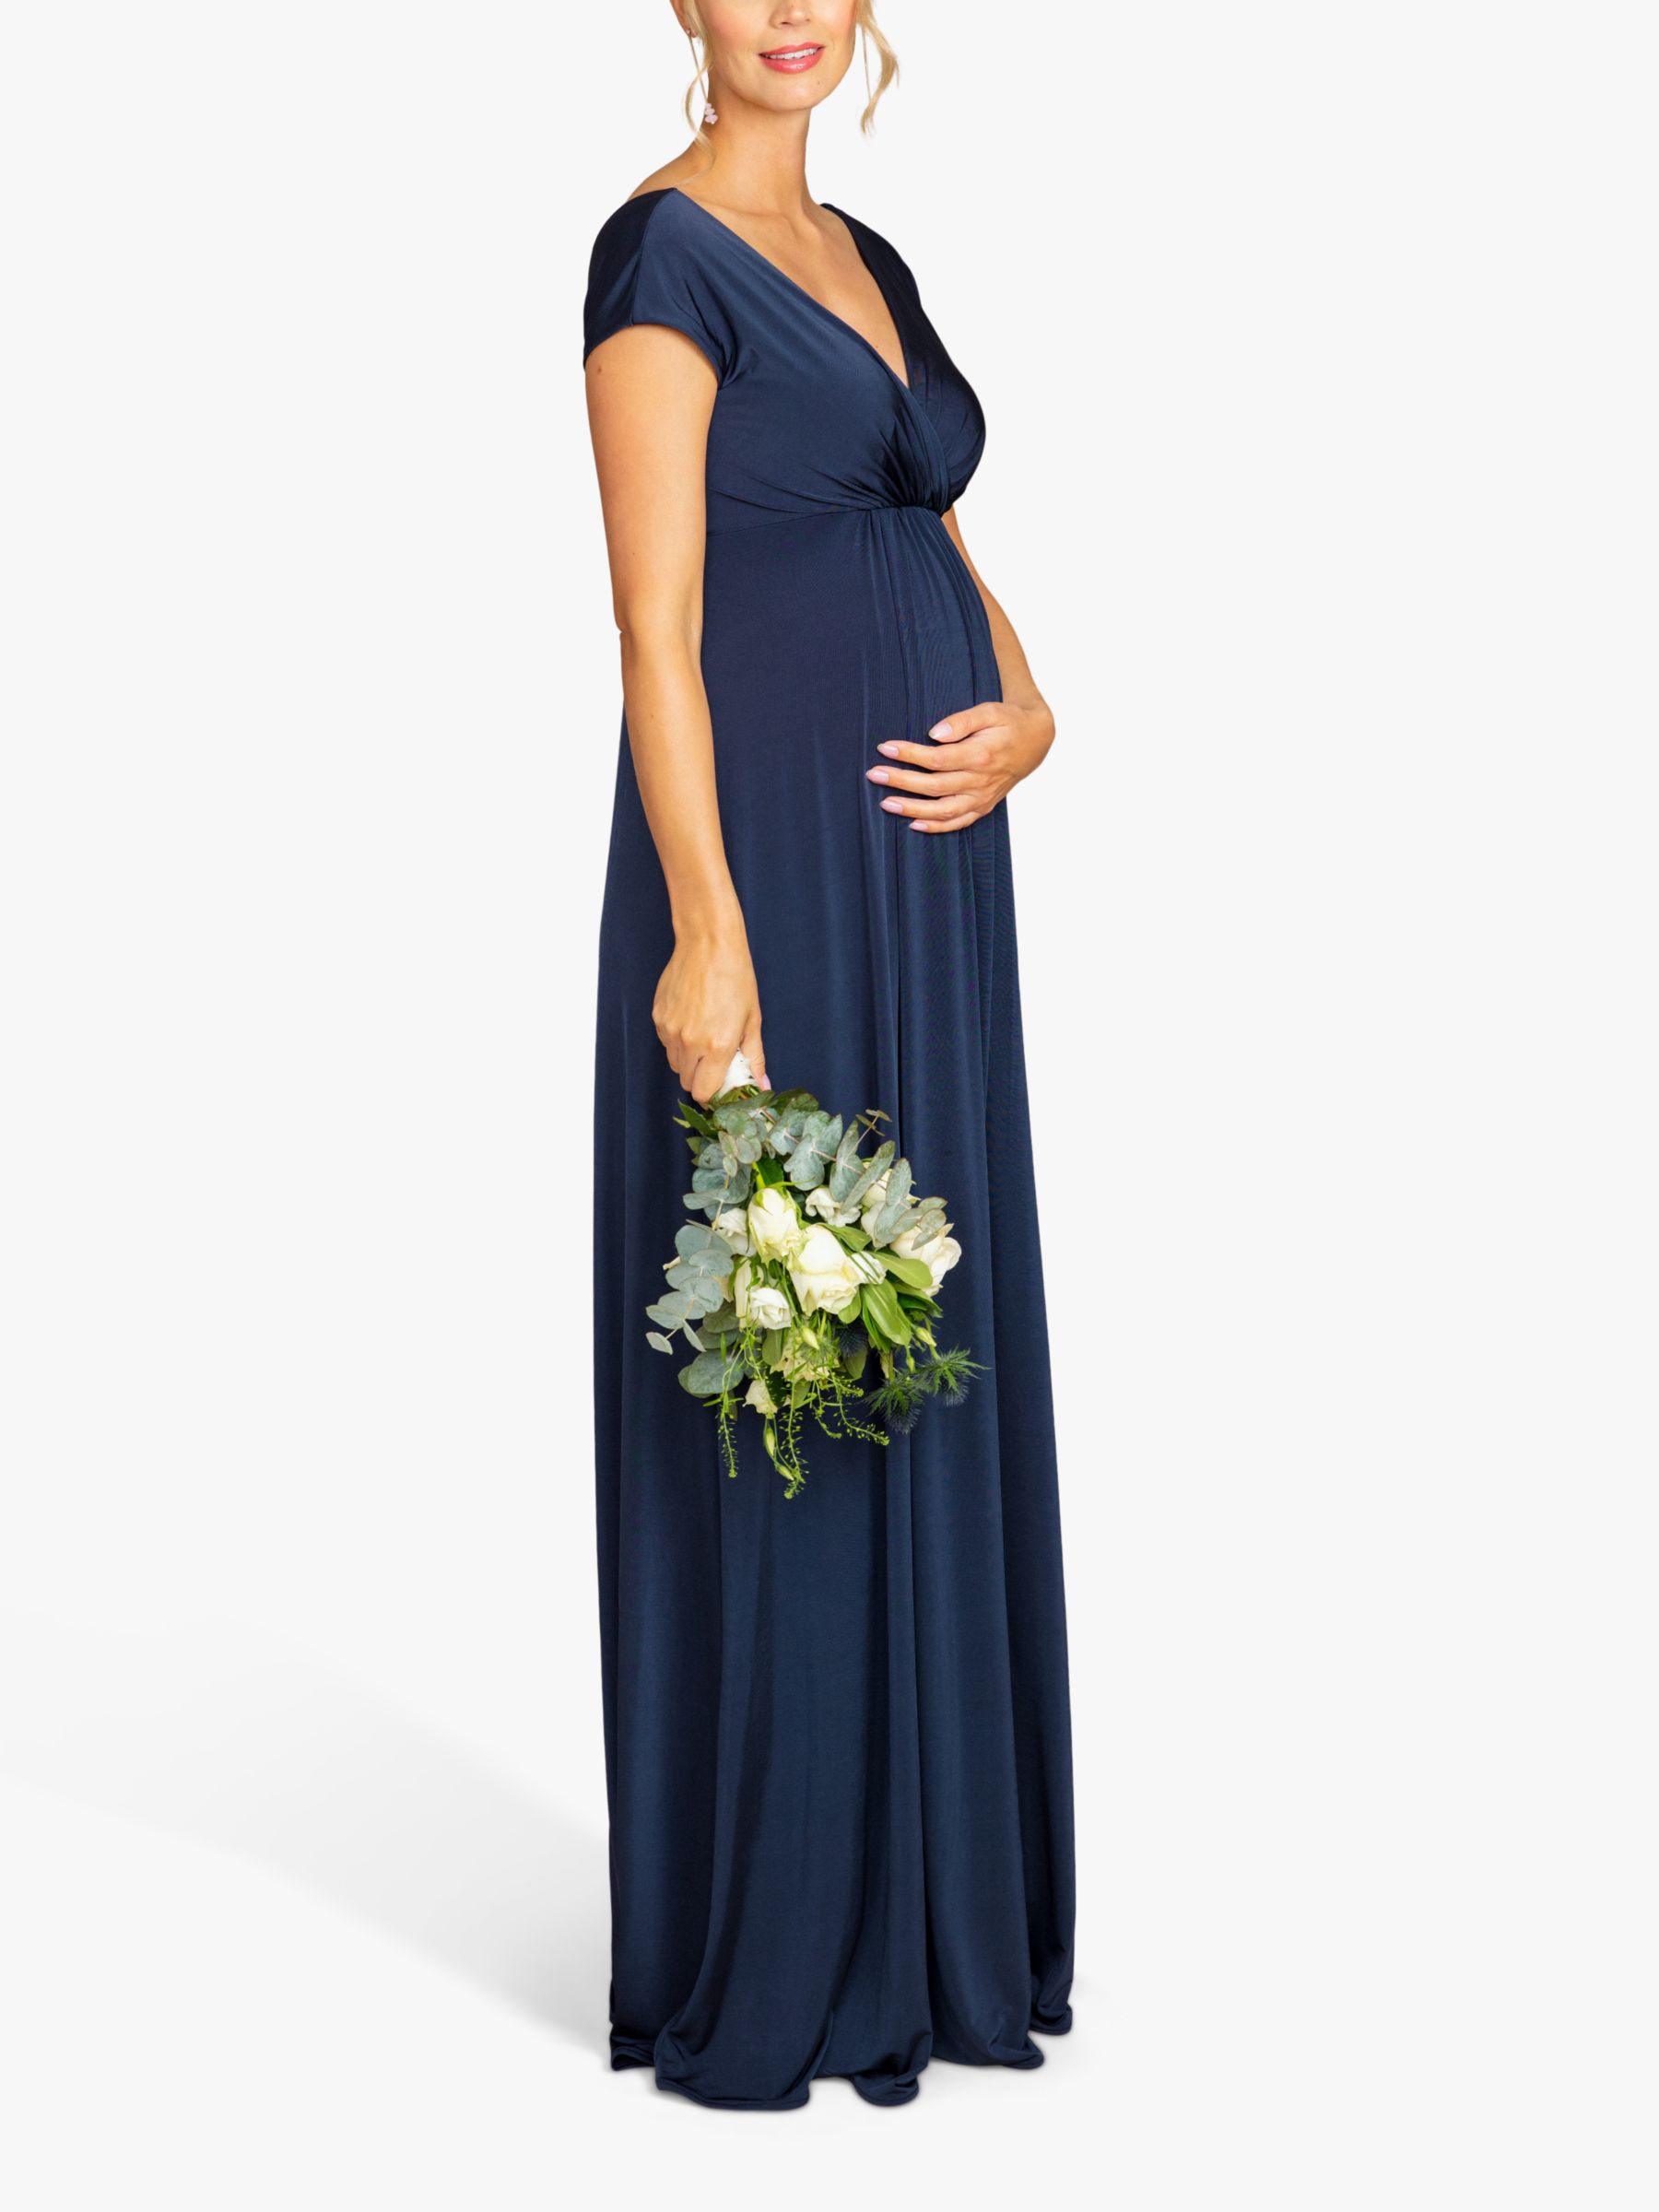 Buy Tiffany Rose Francesca Maternity Maxi Dress Online at johnlewis.com